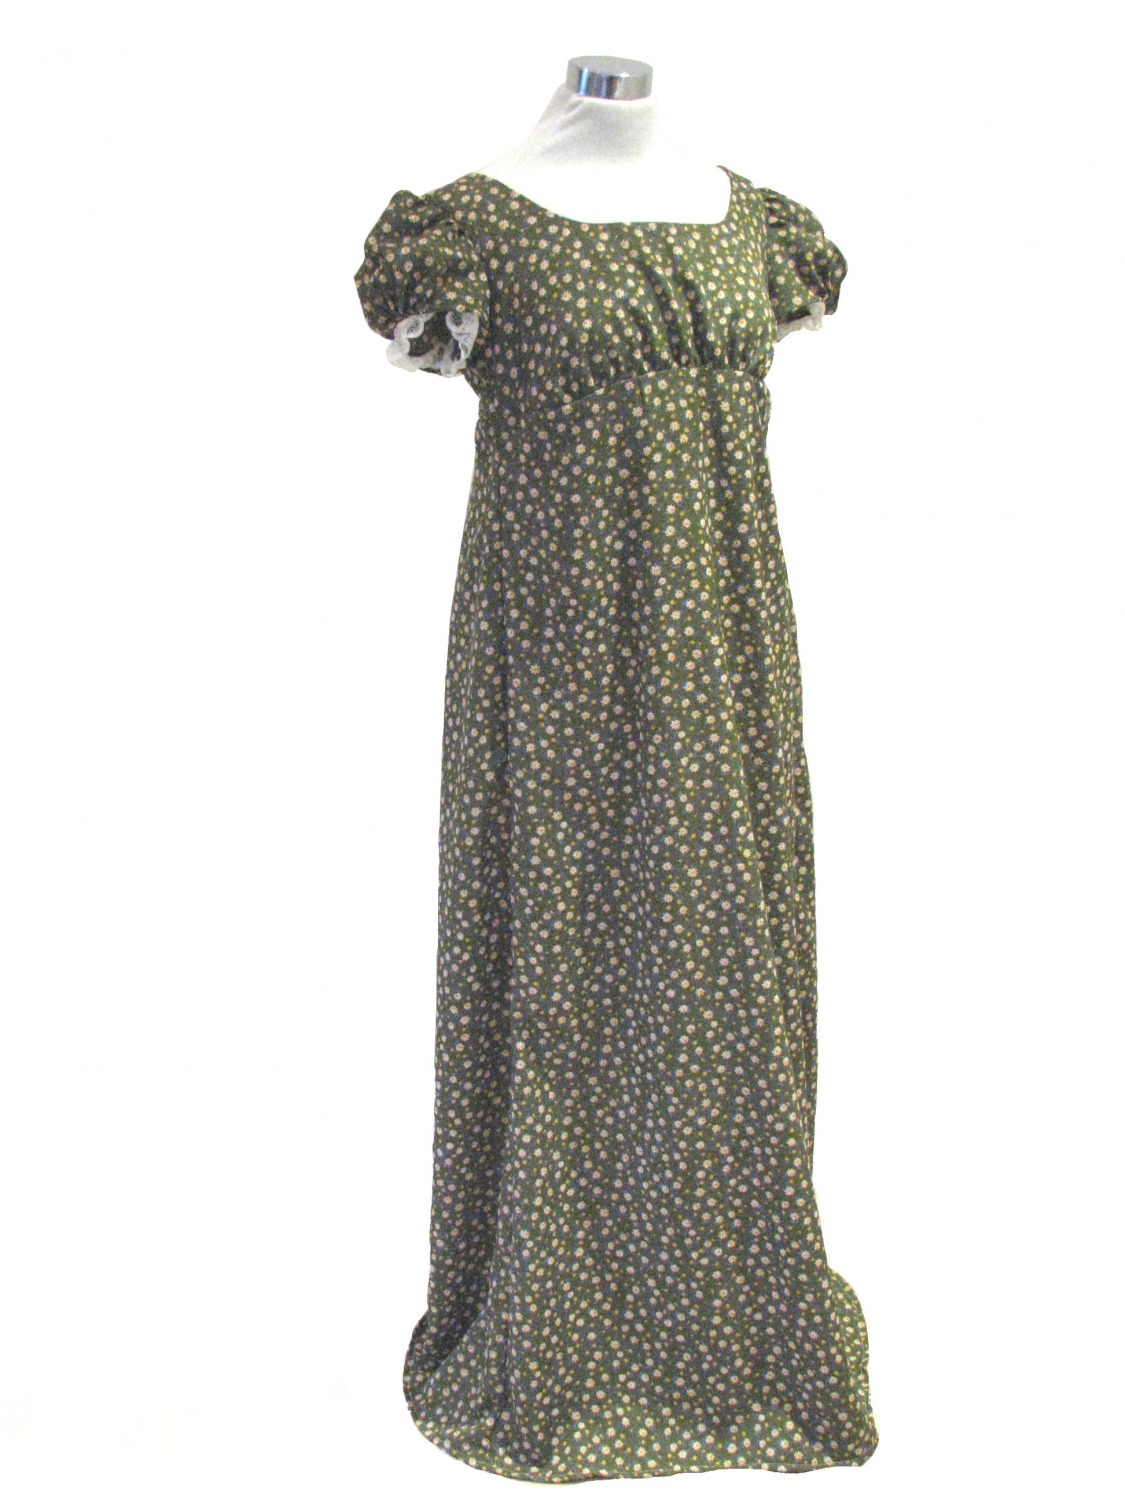 Ladies 19th Century Jane Austen Regency Day Costume Size 12 - 14 Image